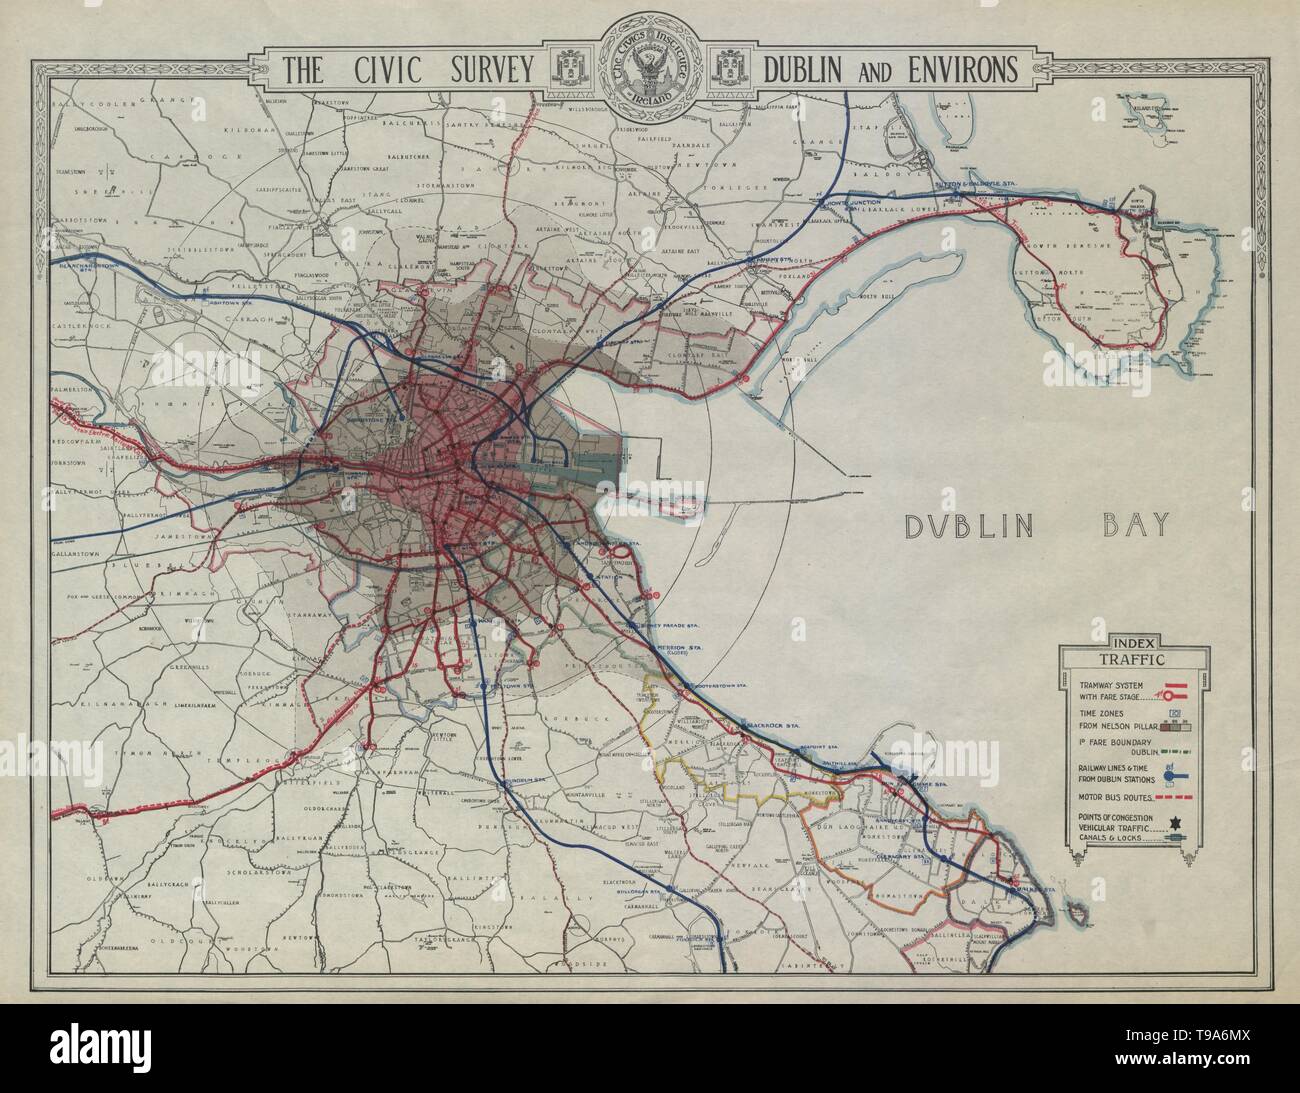 DUBLIN CIVIC SURVEY Public transport. Tramway railway system Bus routes  1925 map Stock Photo - Alamy